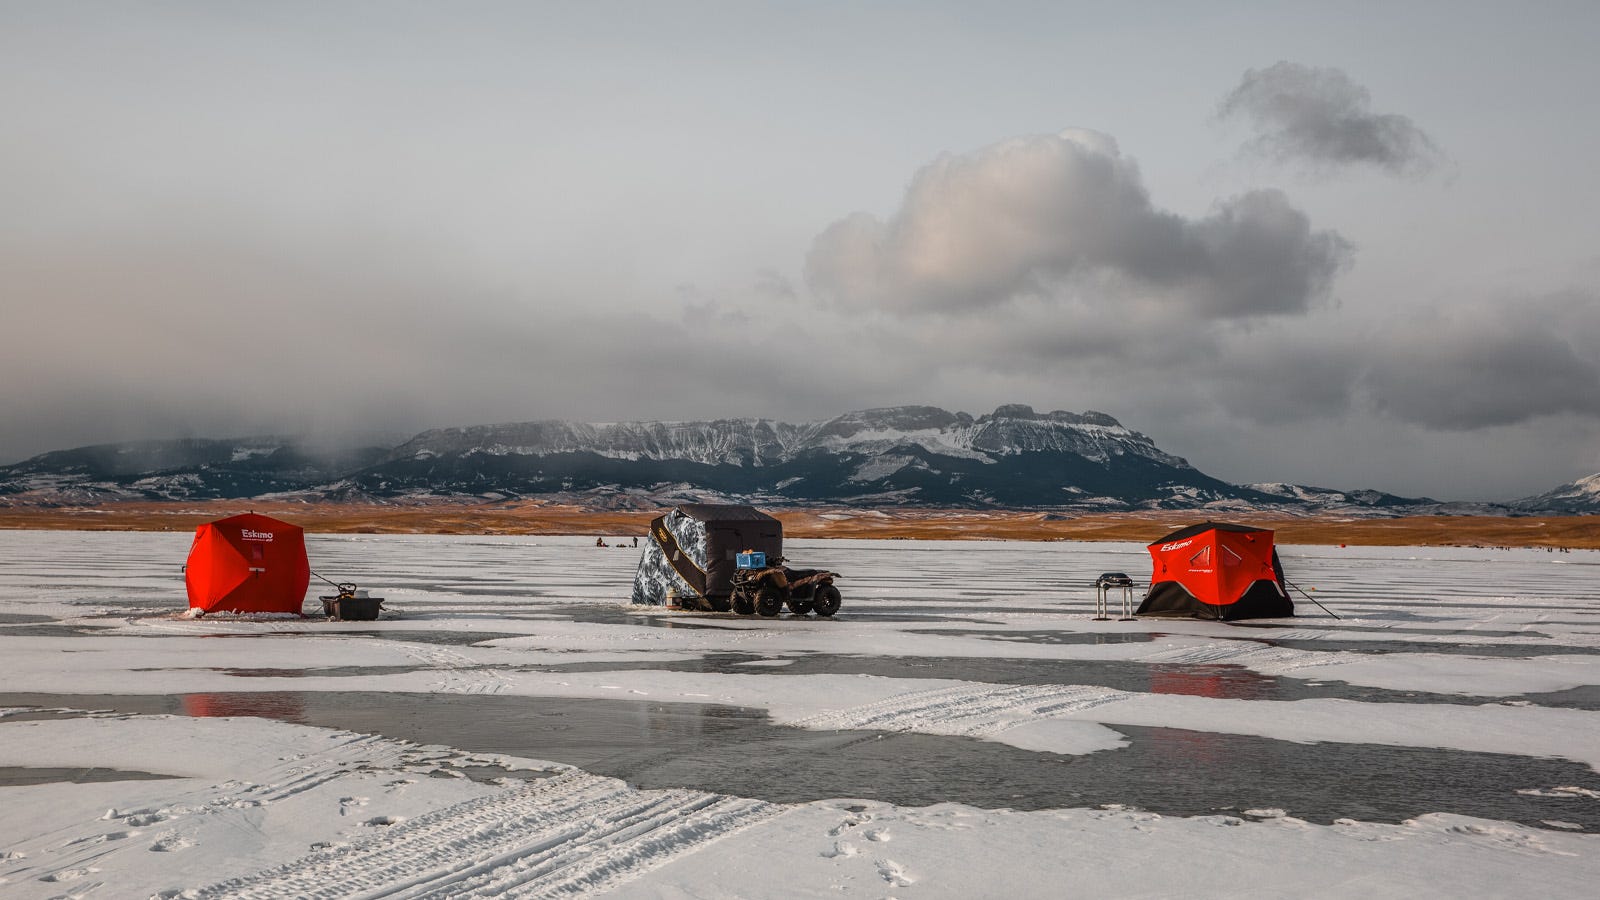 Three ice fishing huts spread across the ice